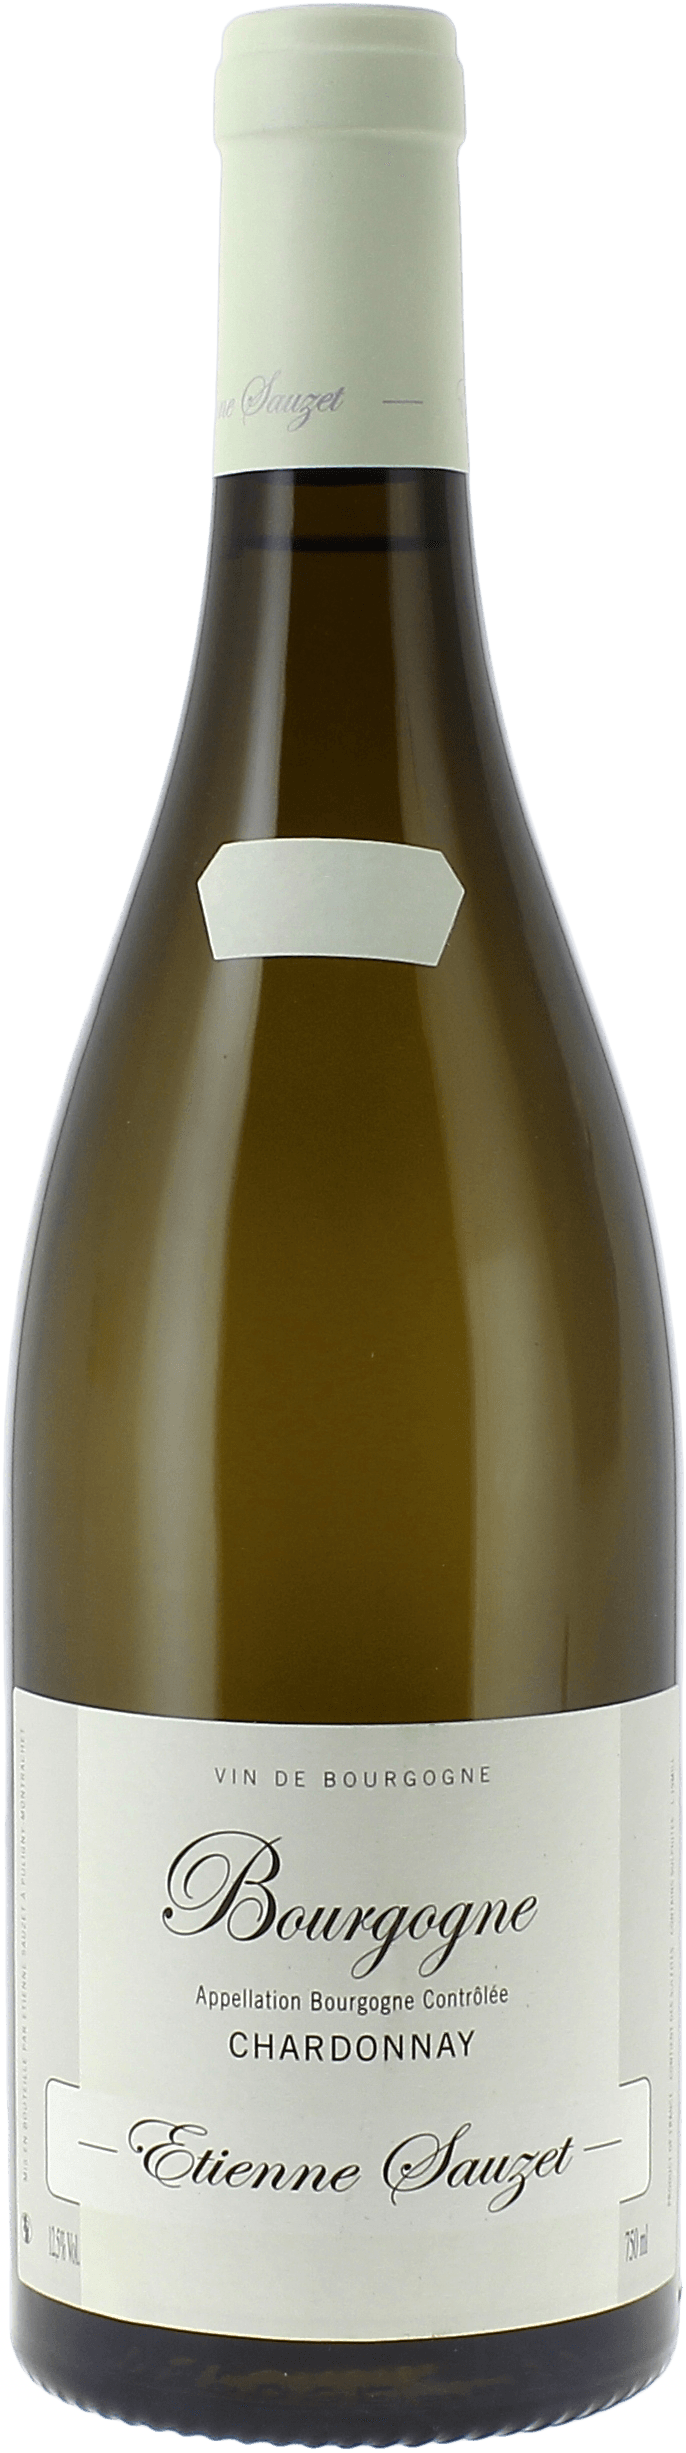 Bourgogne blanc 2016 Domaine SAUZET, Bourgogne blanc